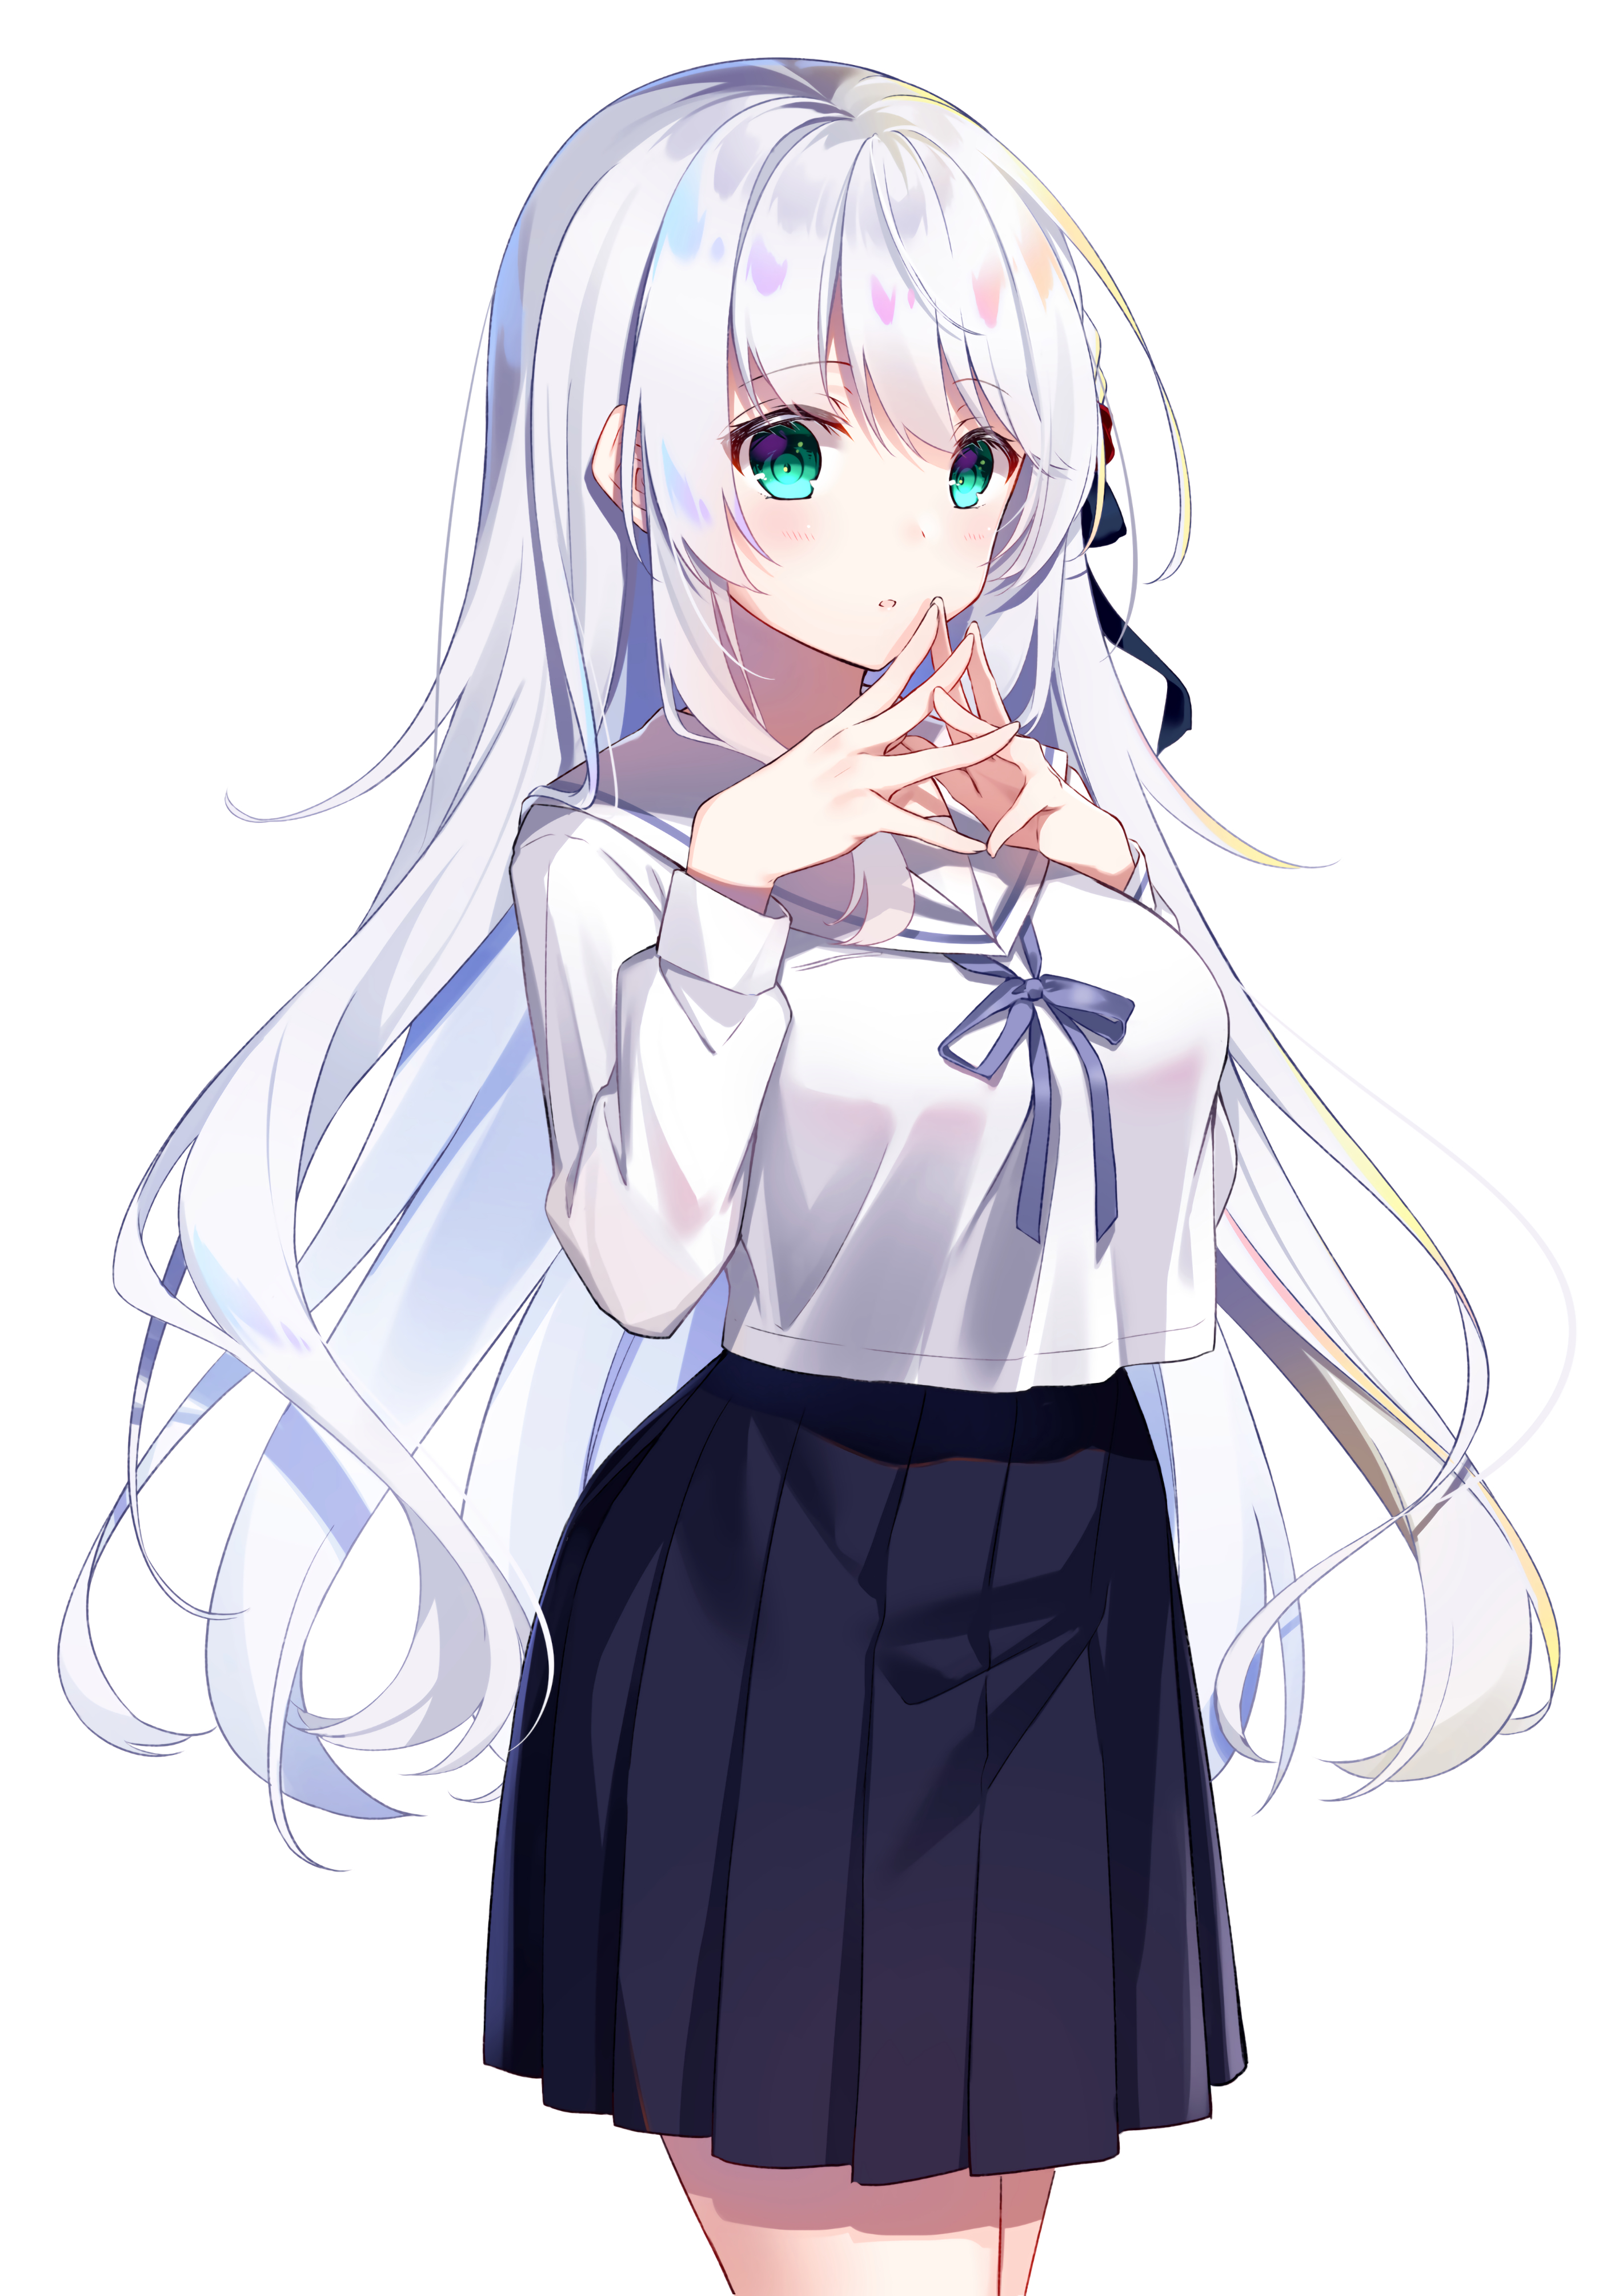 Anime 2841x4018 long hair white hair anime girls school uniform schoolgirl